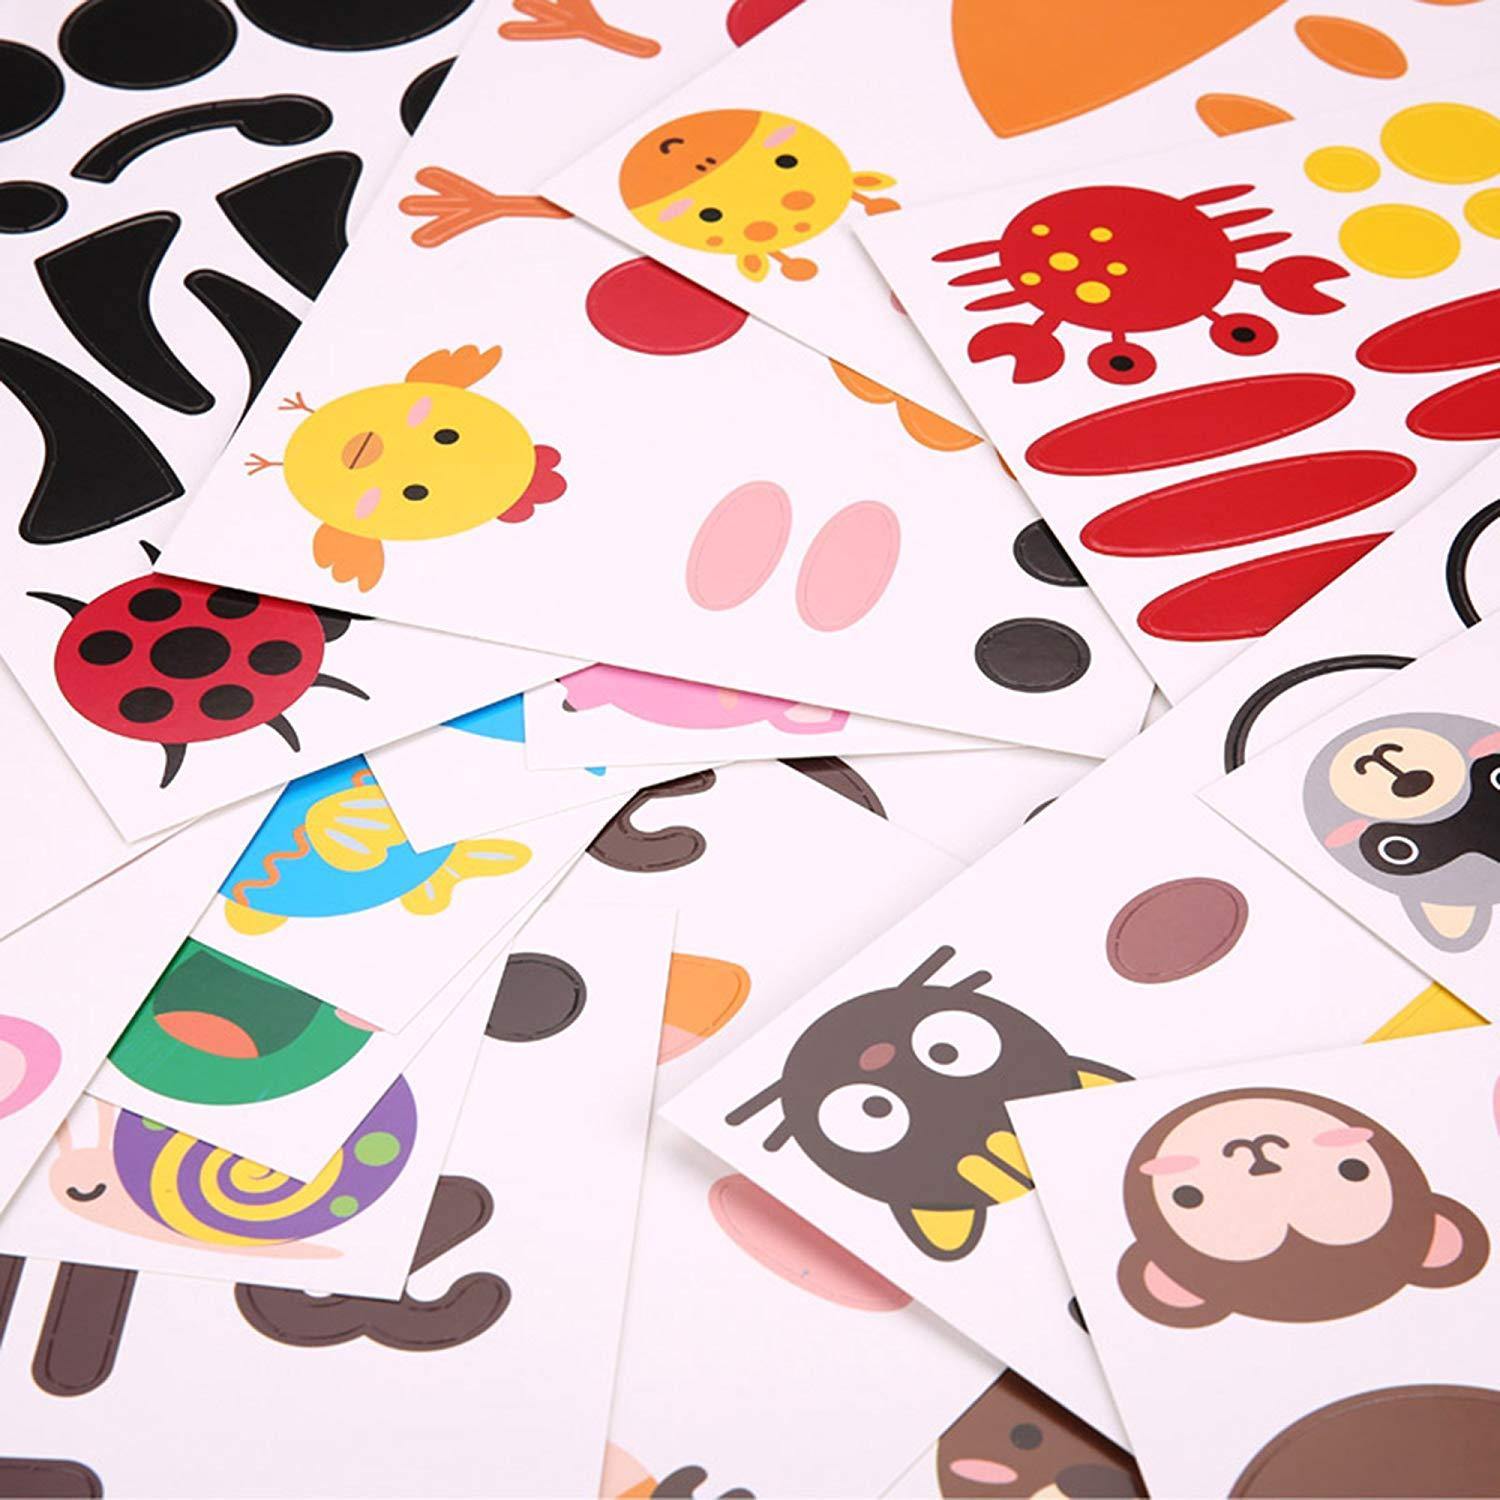 Bosonshop Felt Paper Cup Sticker DIY Craft Kits Paper Art Training Early Educatioanl Playing Toys Kids